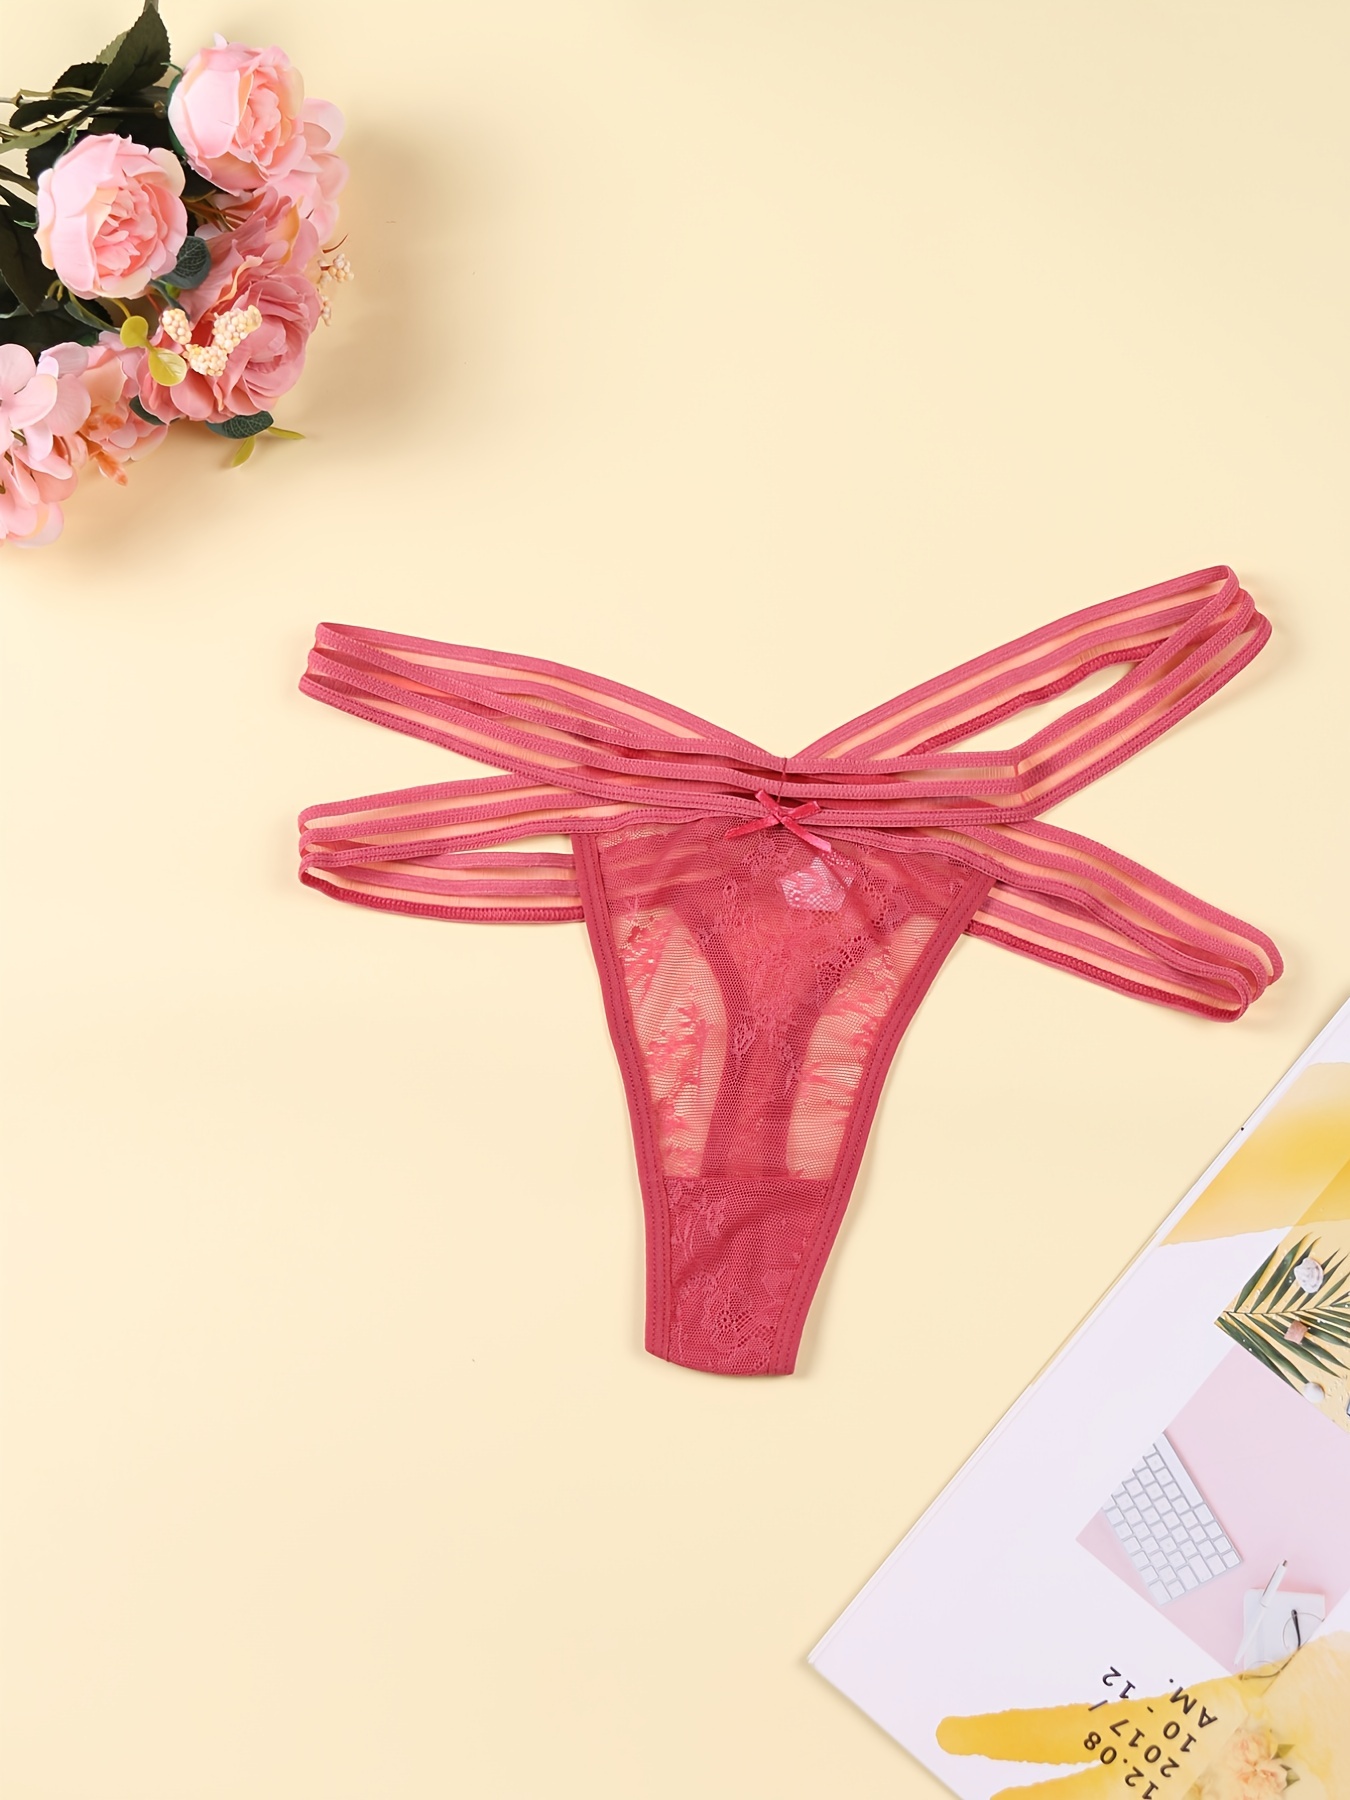 Strappy Lace Thong Panties, Floral Print Semi-Sheer High Waist Criss Cross  Panties, Women's Lingerie & Underwear